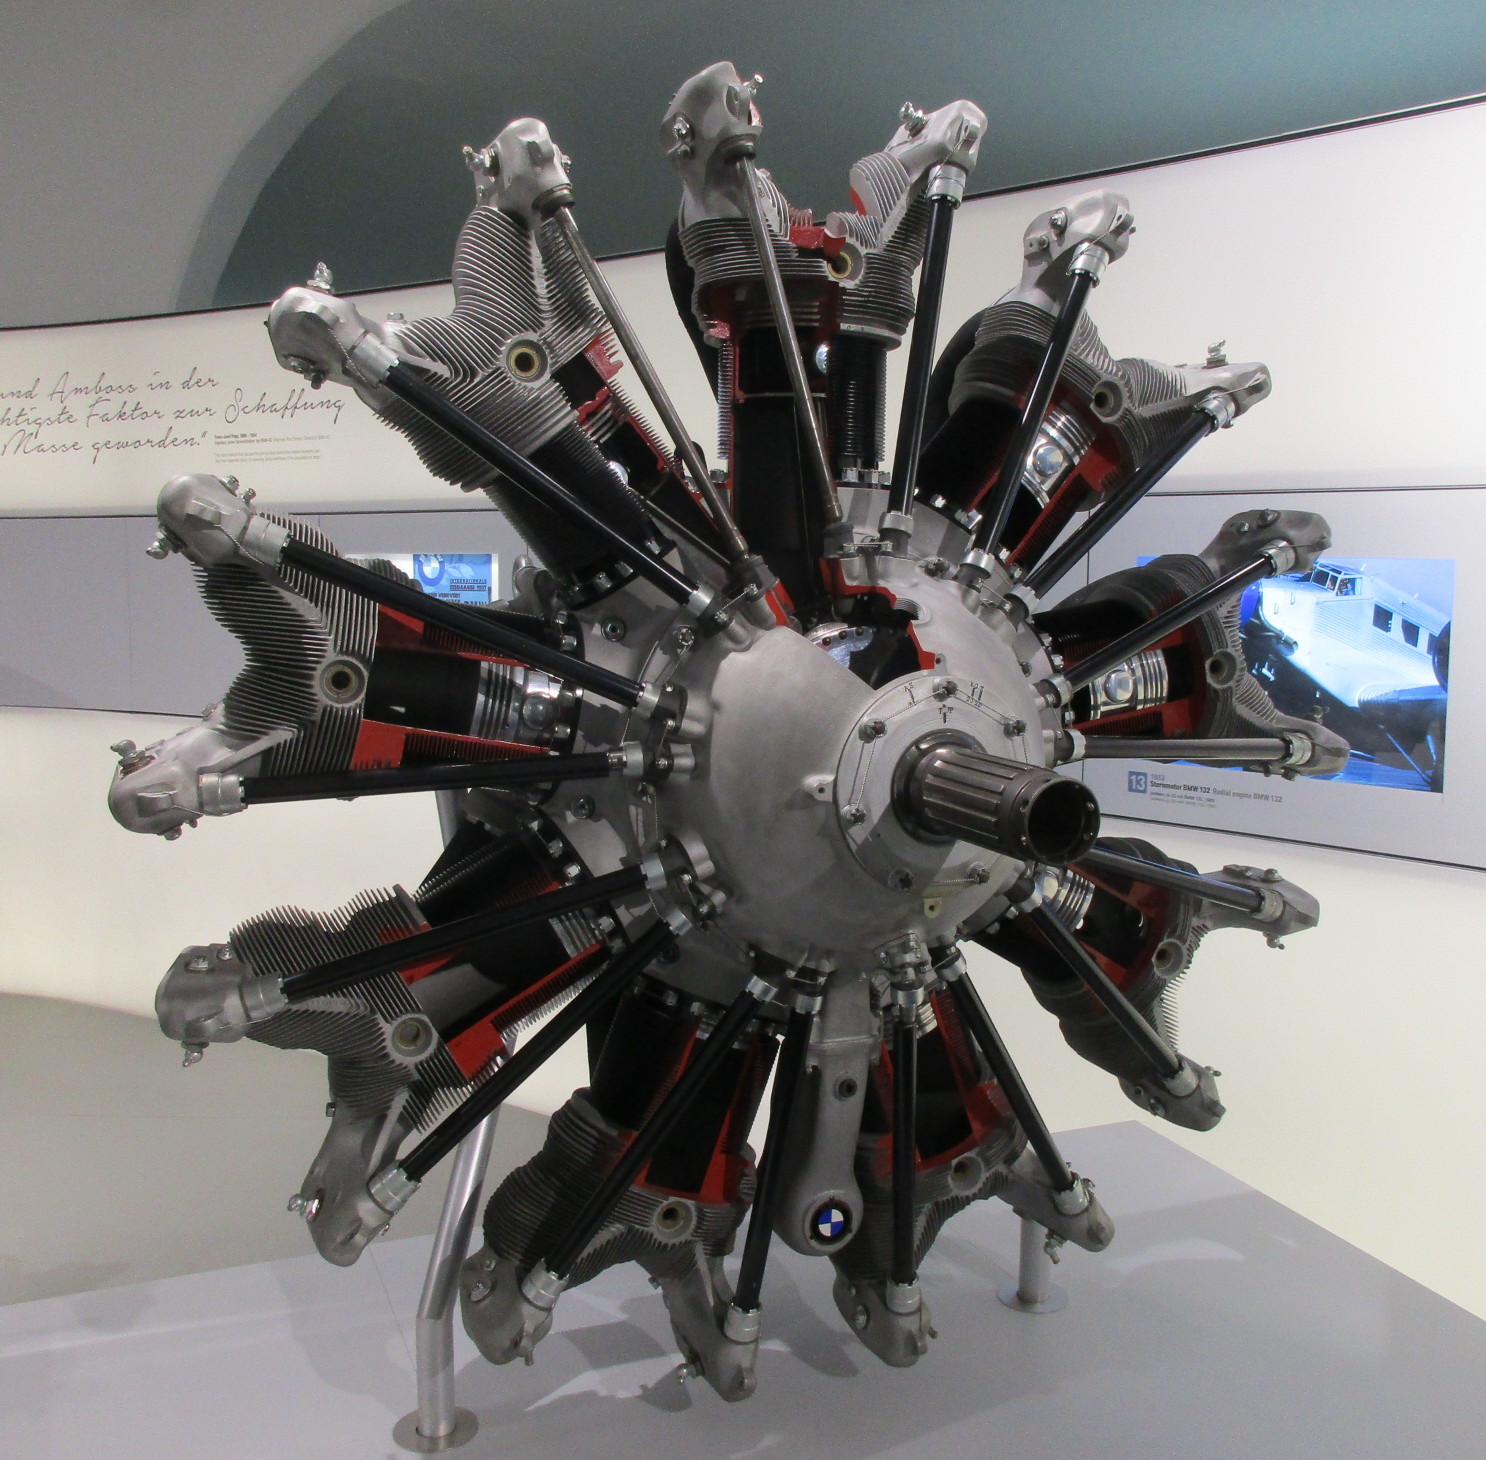 BMW 132, a nine-cylinder radial engine